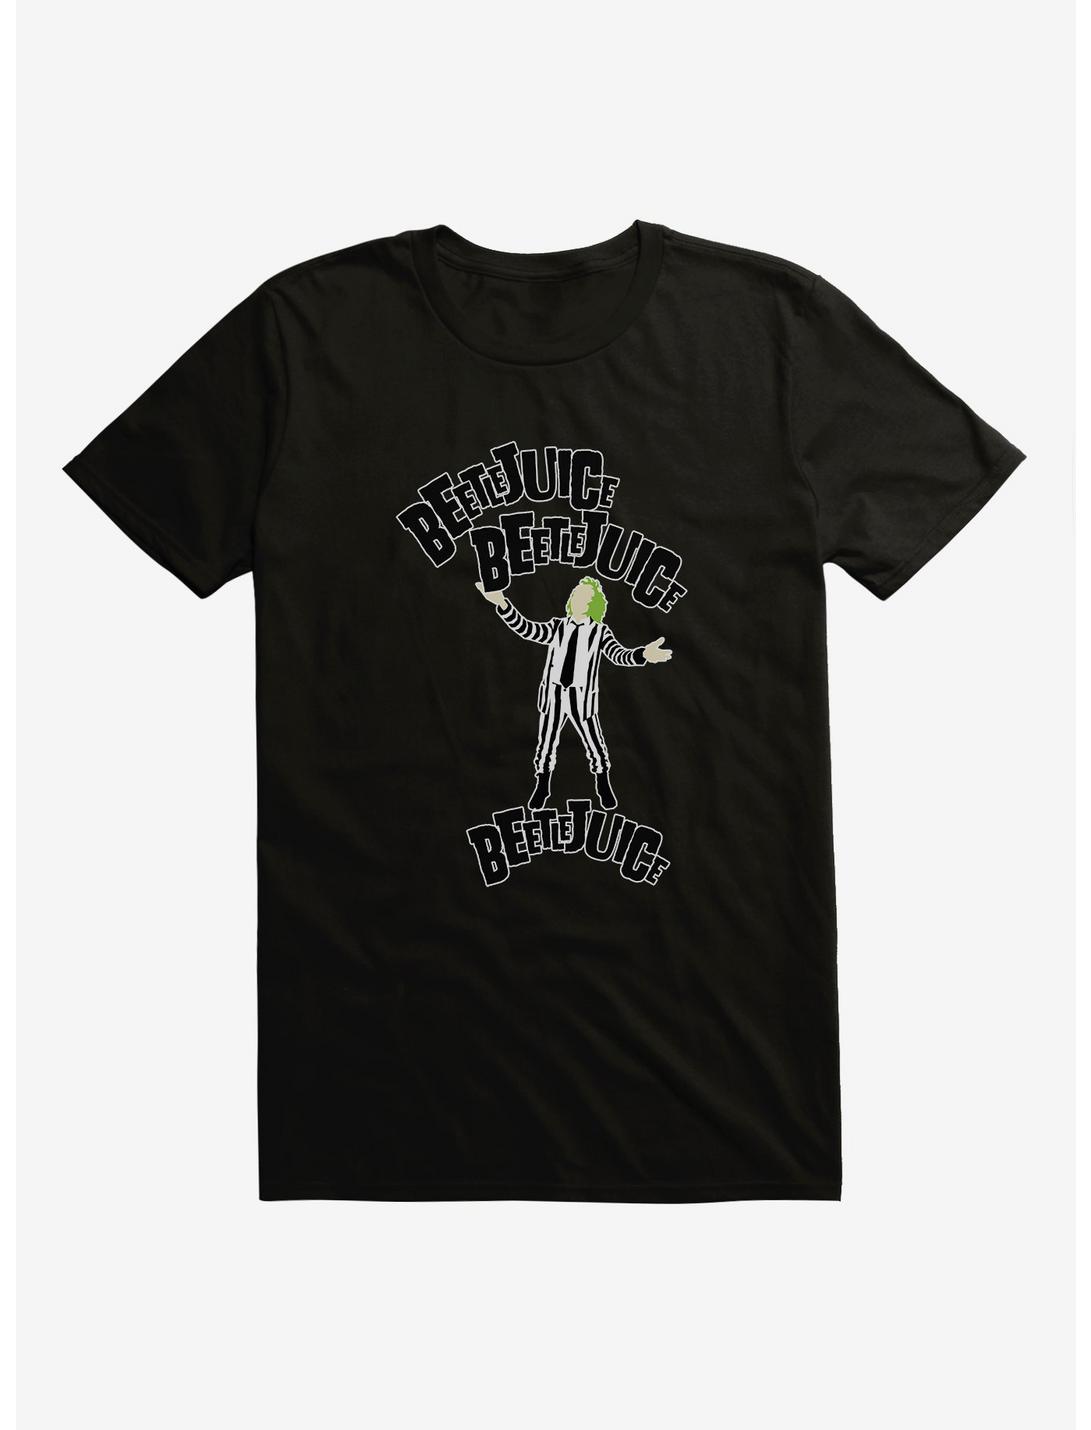 Beetlejuice Three Times T-Shirt, BLACK, hi-res